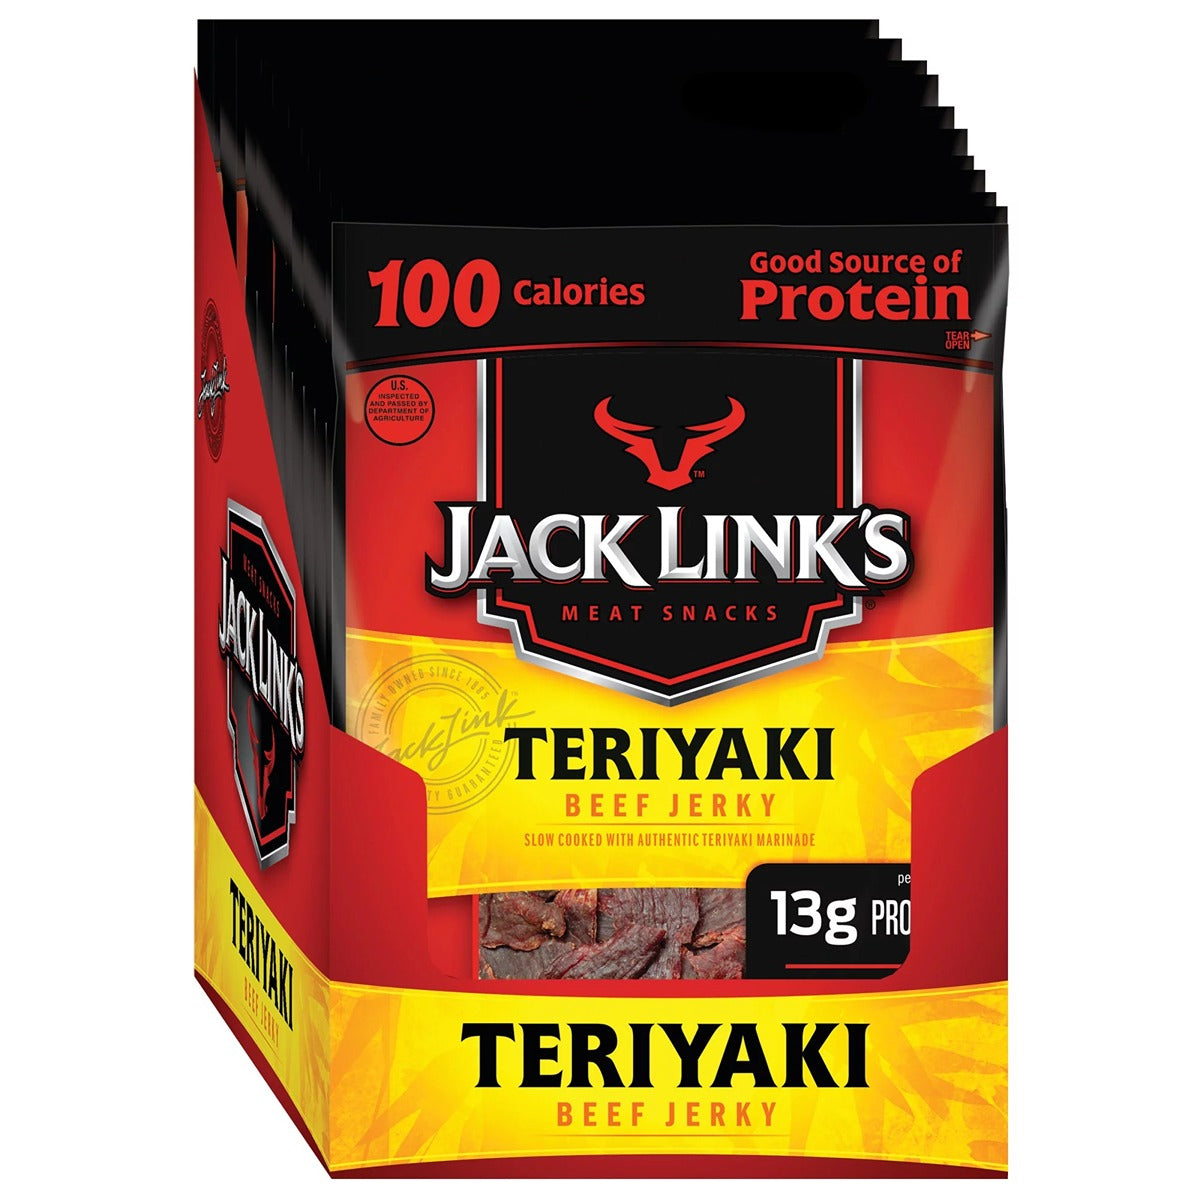 JACKLINK'S TERIYAKI BEEF STEAK 13G